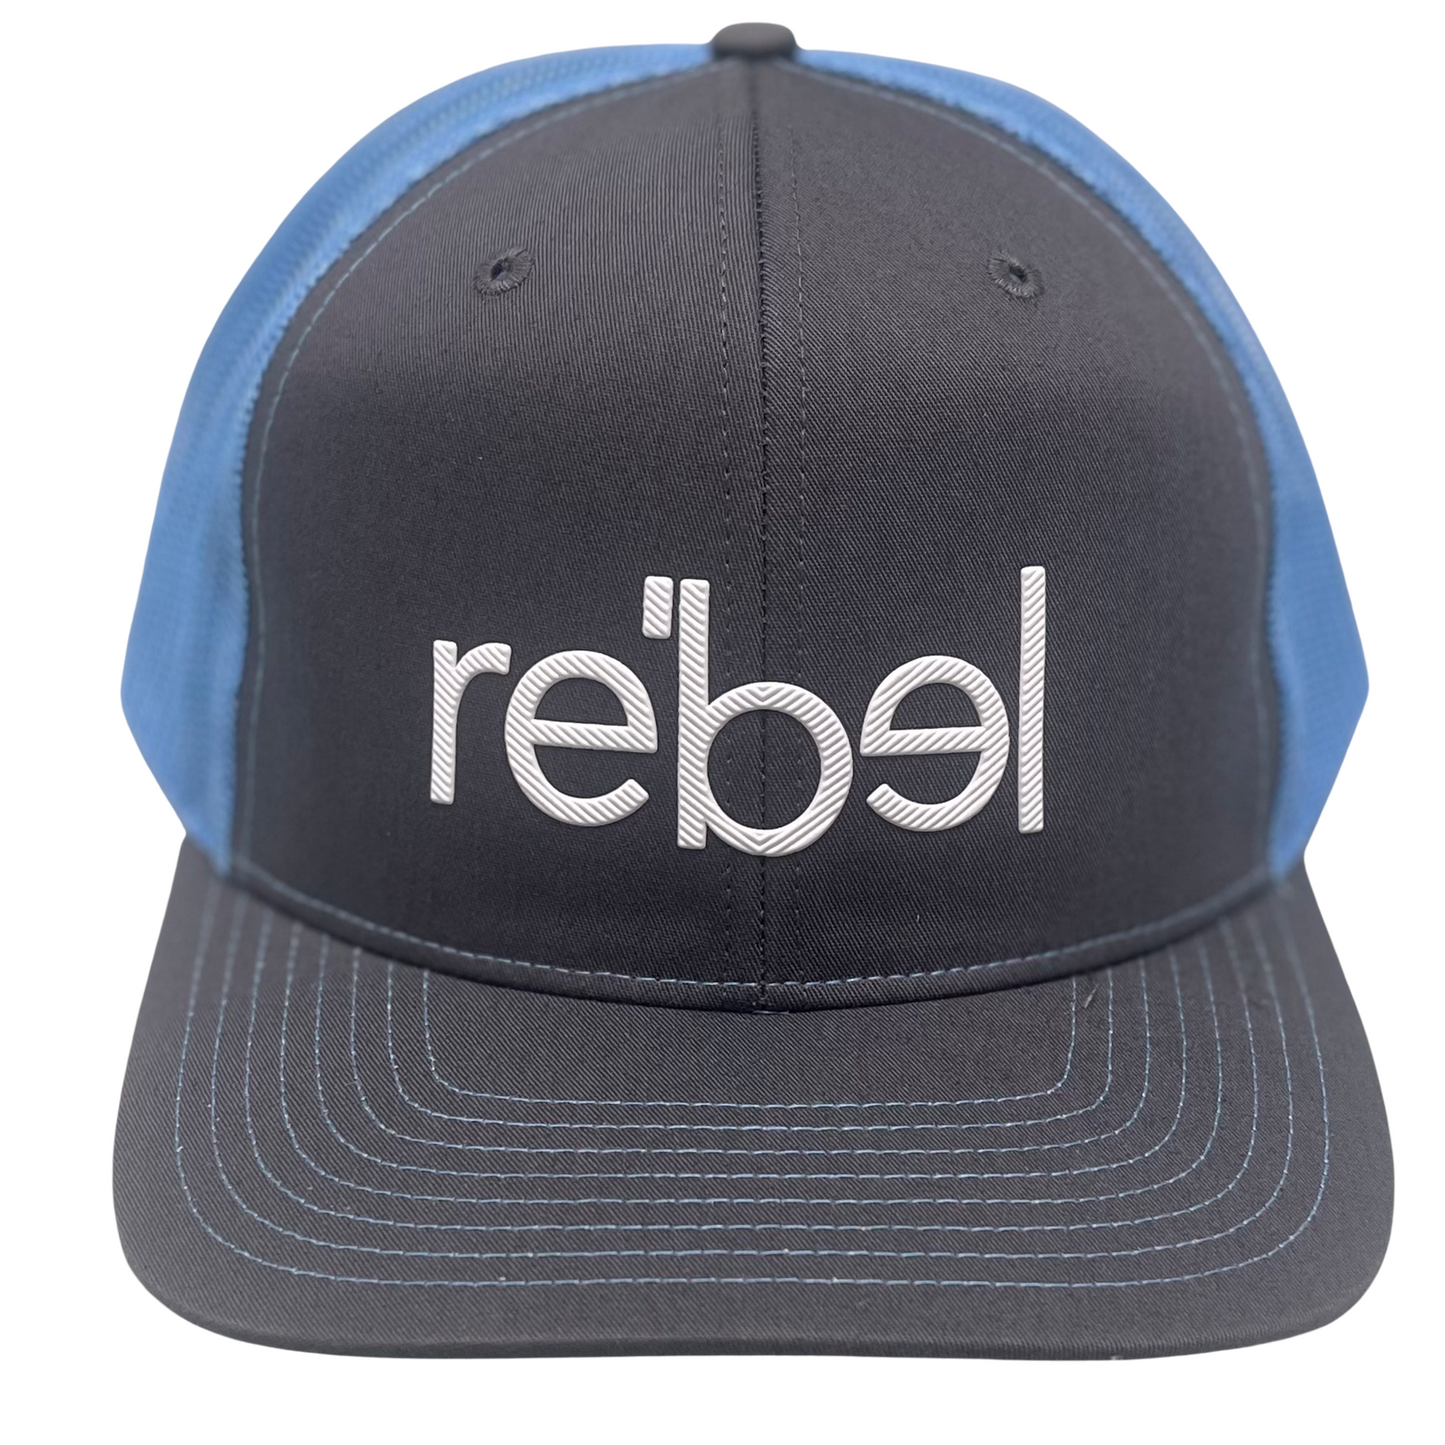 Rebel Mesh Back (Gray front, Rebel logo)